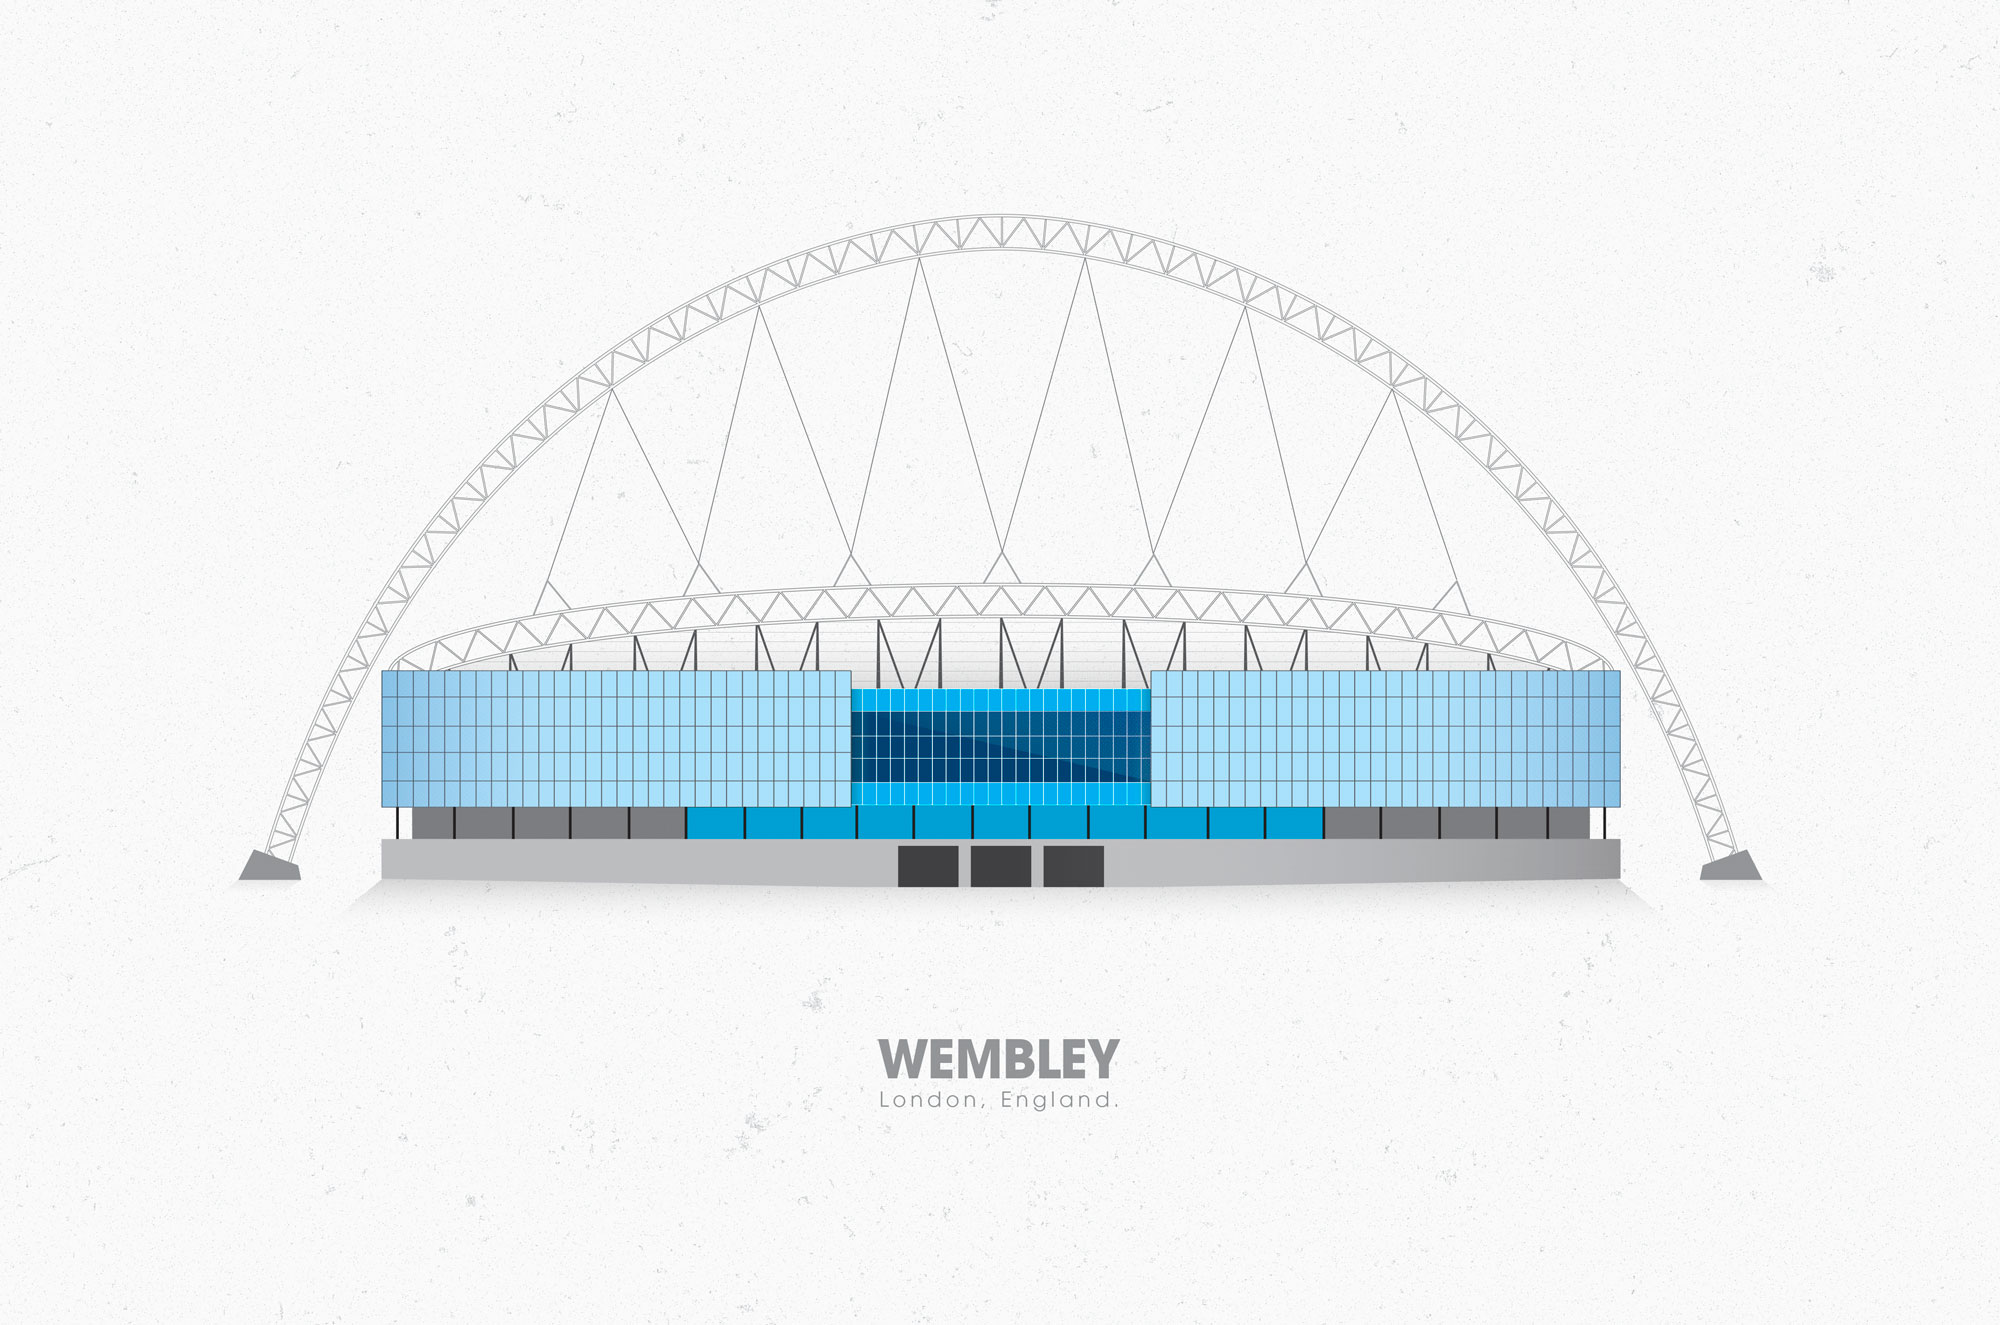 Stadium_Wembley